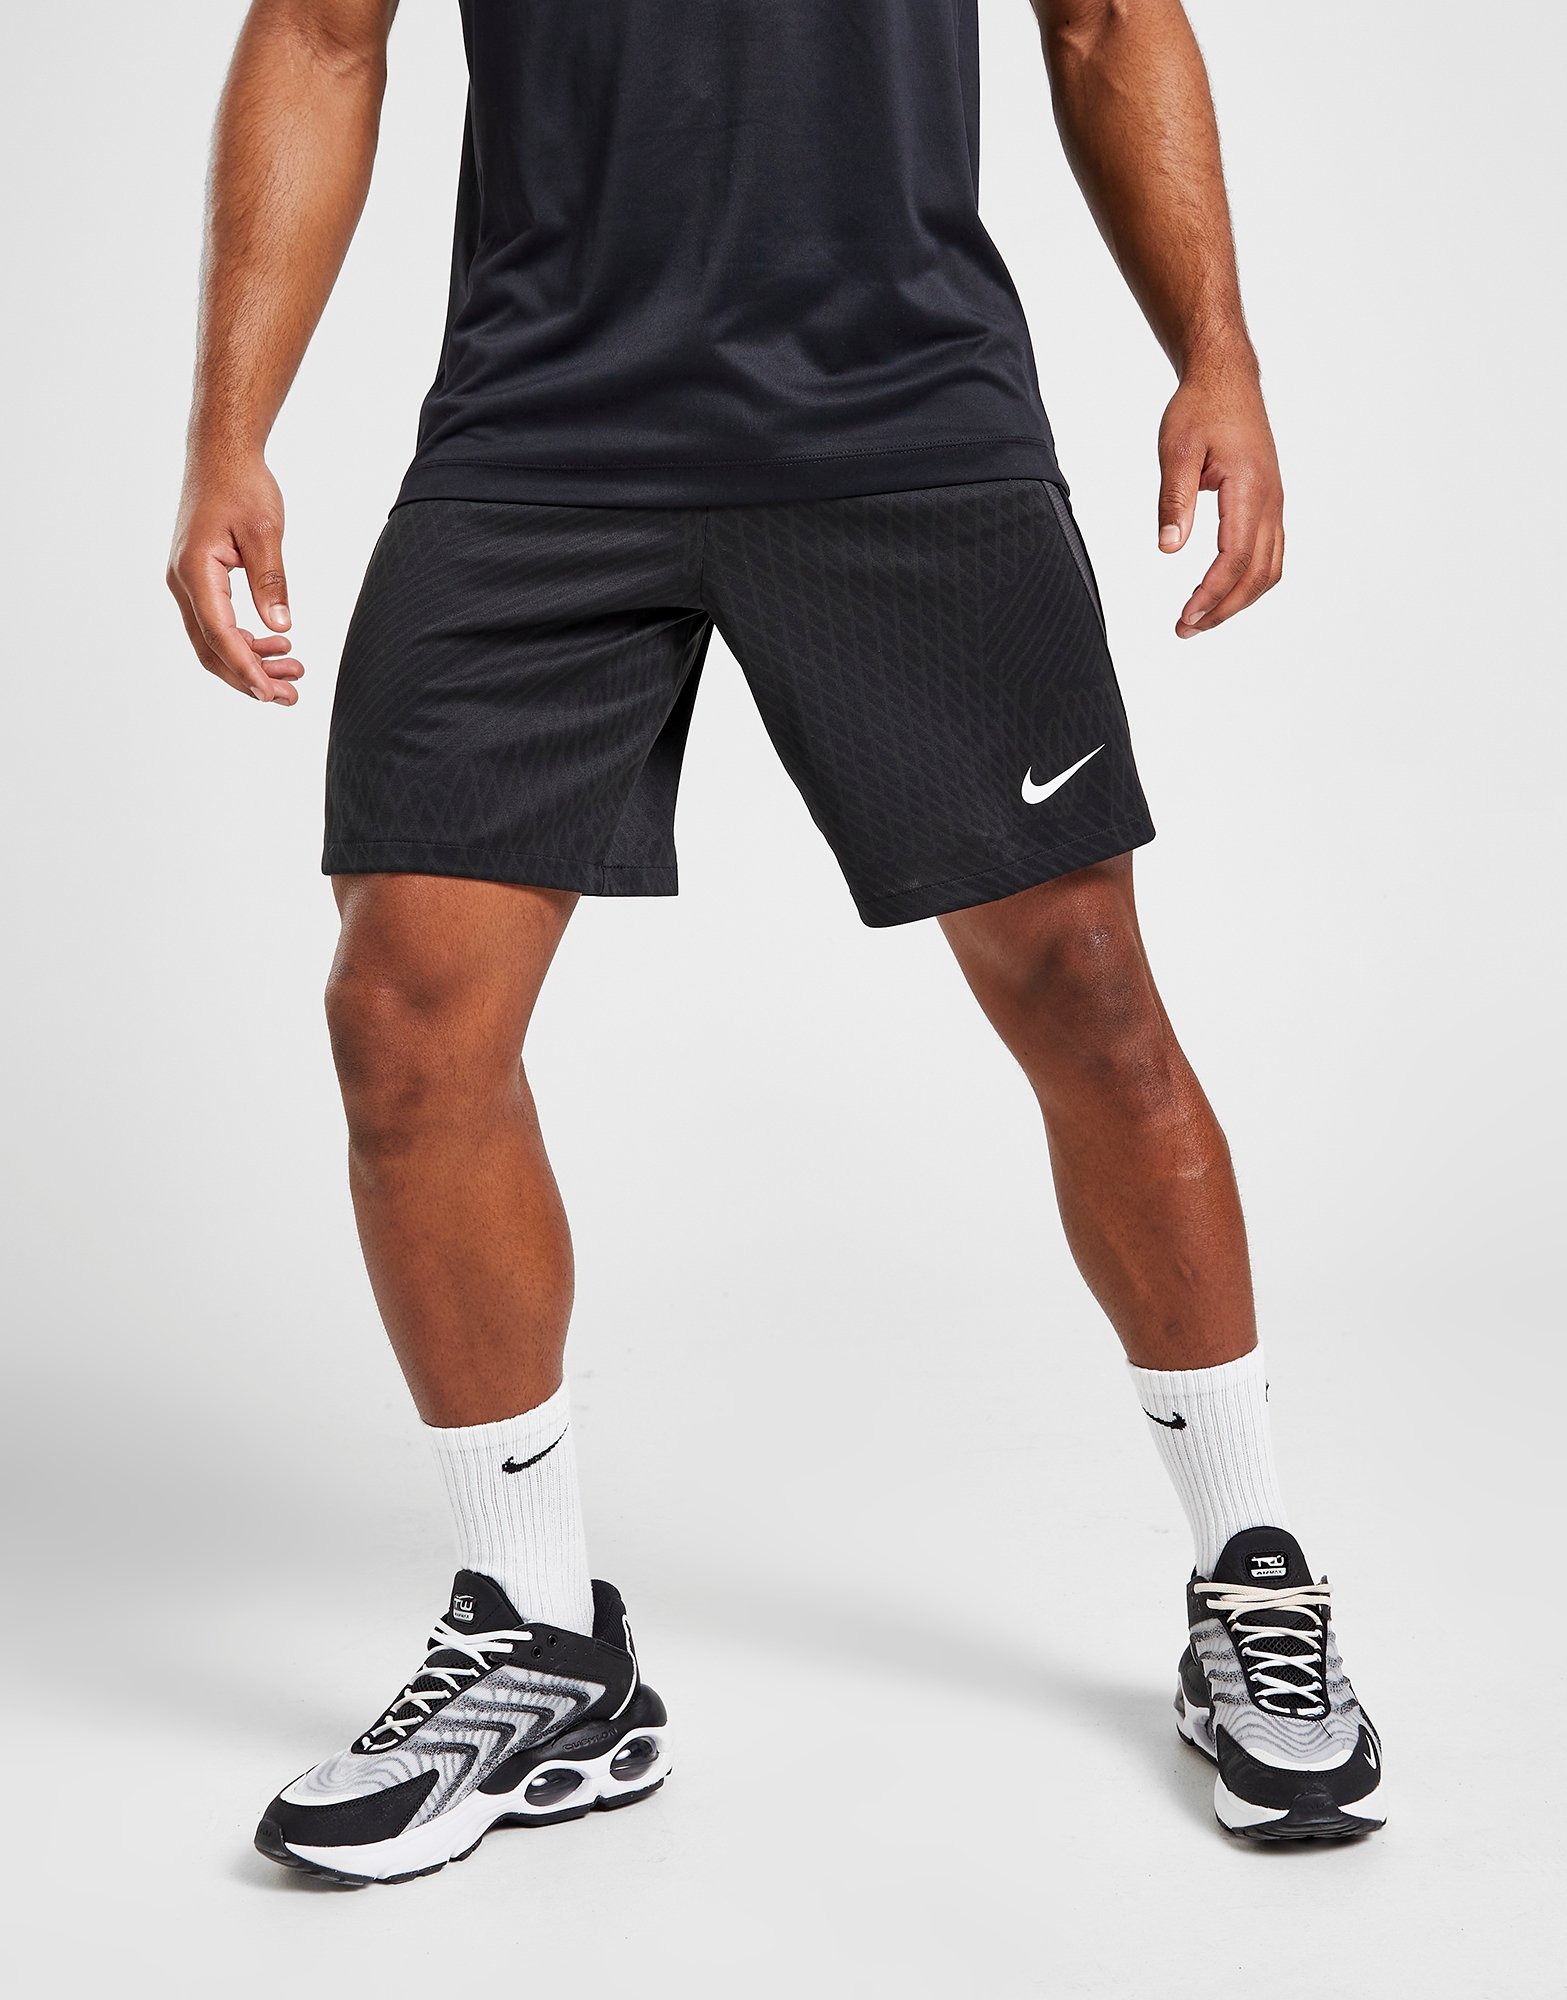 Nike XL Black Boxing Basketball Shorts